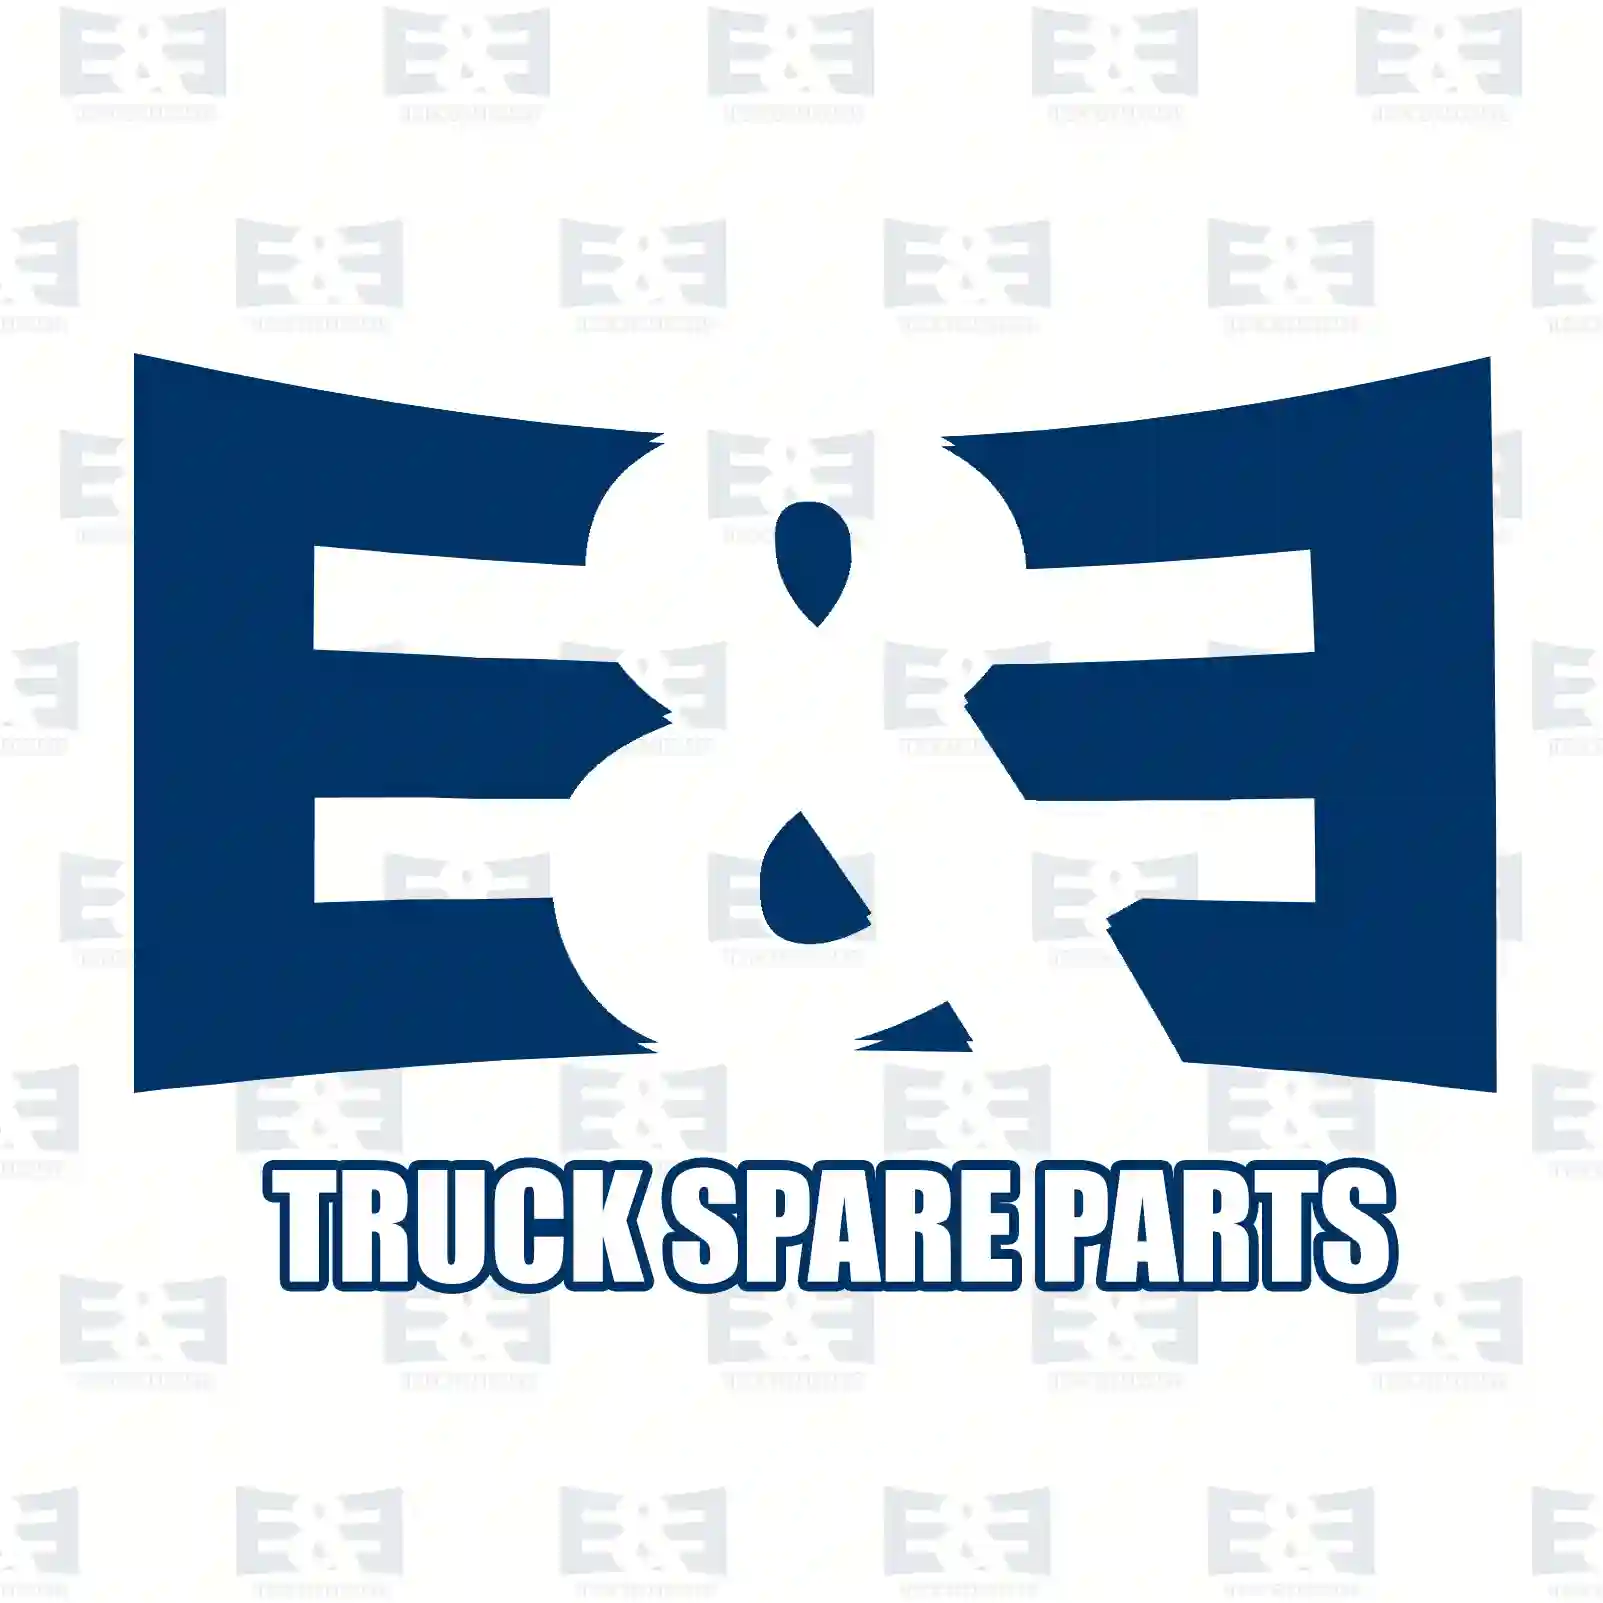 Shock absorber, 2E2283078, 20549244, ZG41556-0008 ||  2E2283078 E&E Truck Spare Parts | Truck Spare Parts, Auotomotive Spare Parts Shock absorber, 2E2283078, 20549244, ZG41556-0008 ||  2E2283078 E&E Truck Spare Parts | Truck Spare Parts, Auotomotive Spare Parts